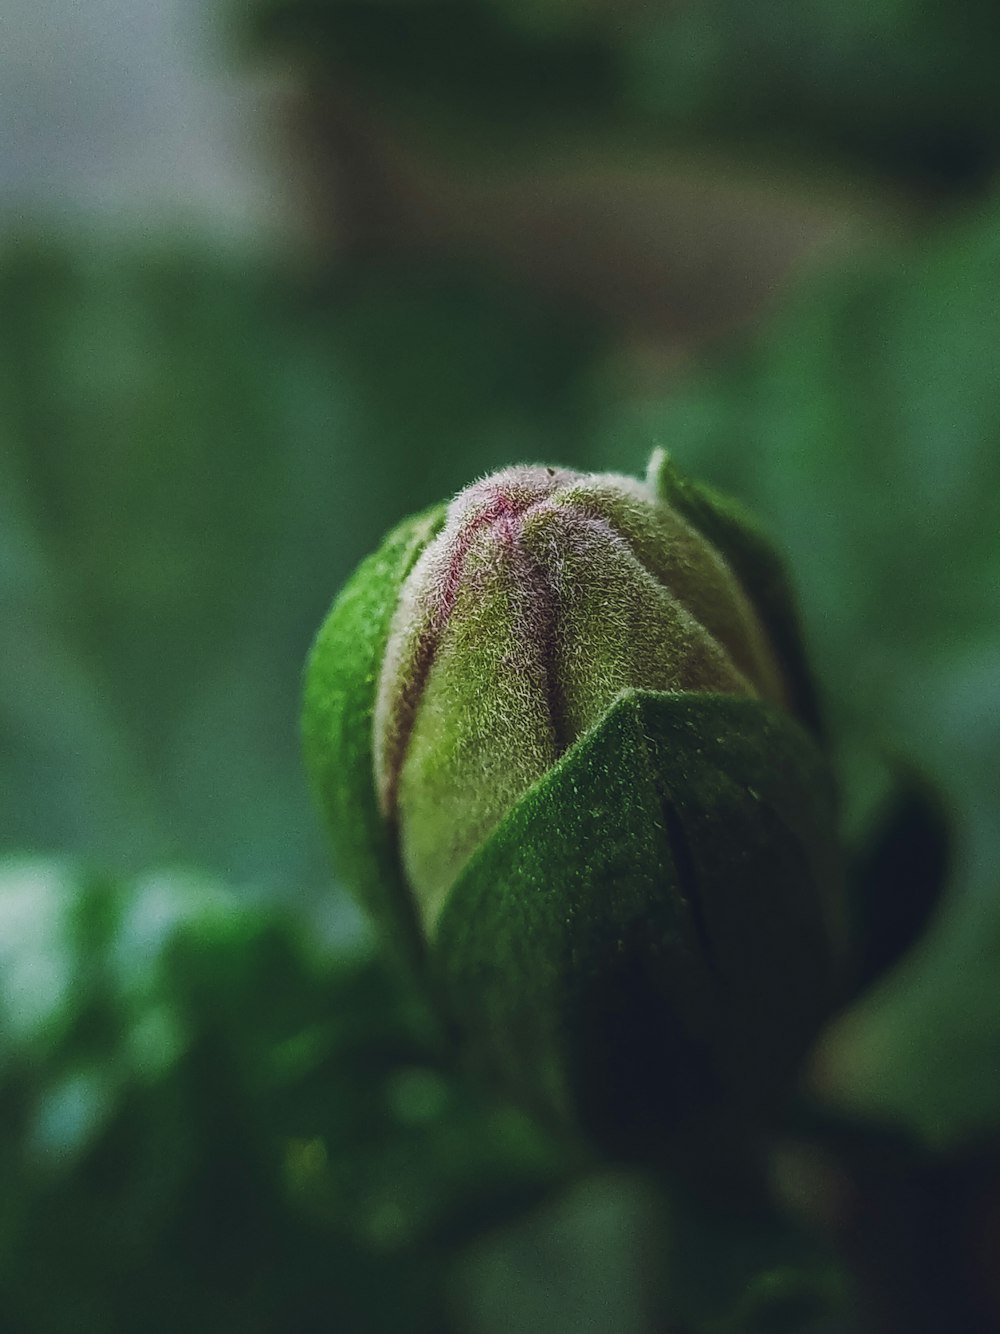 green and purple flower bud in macro shot